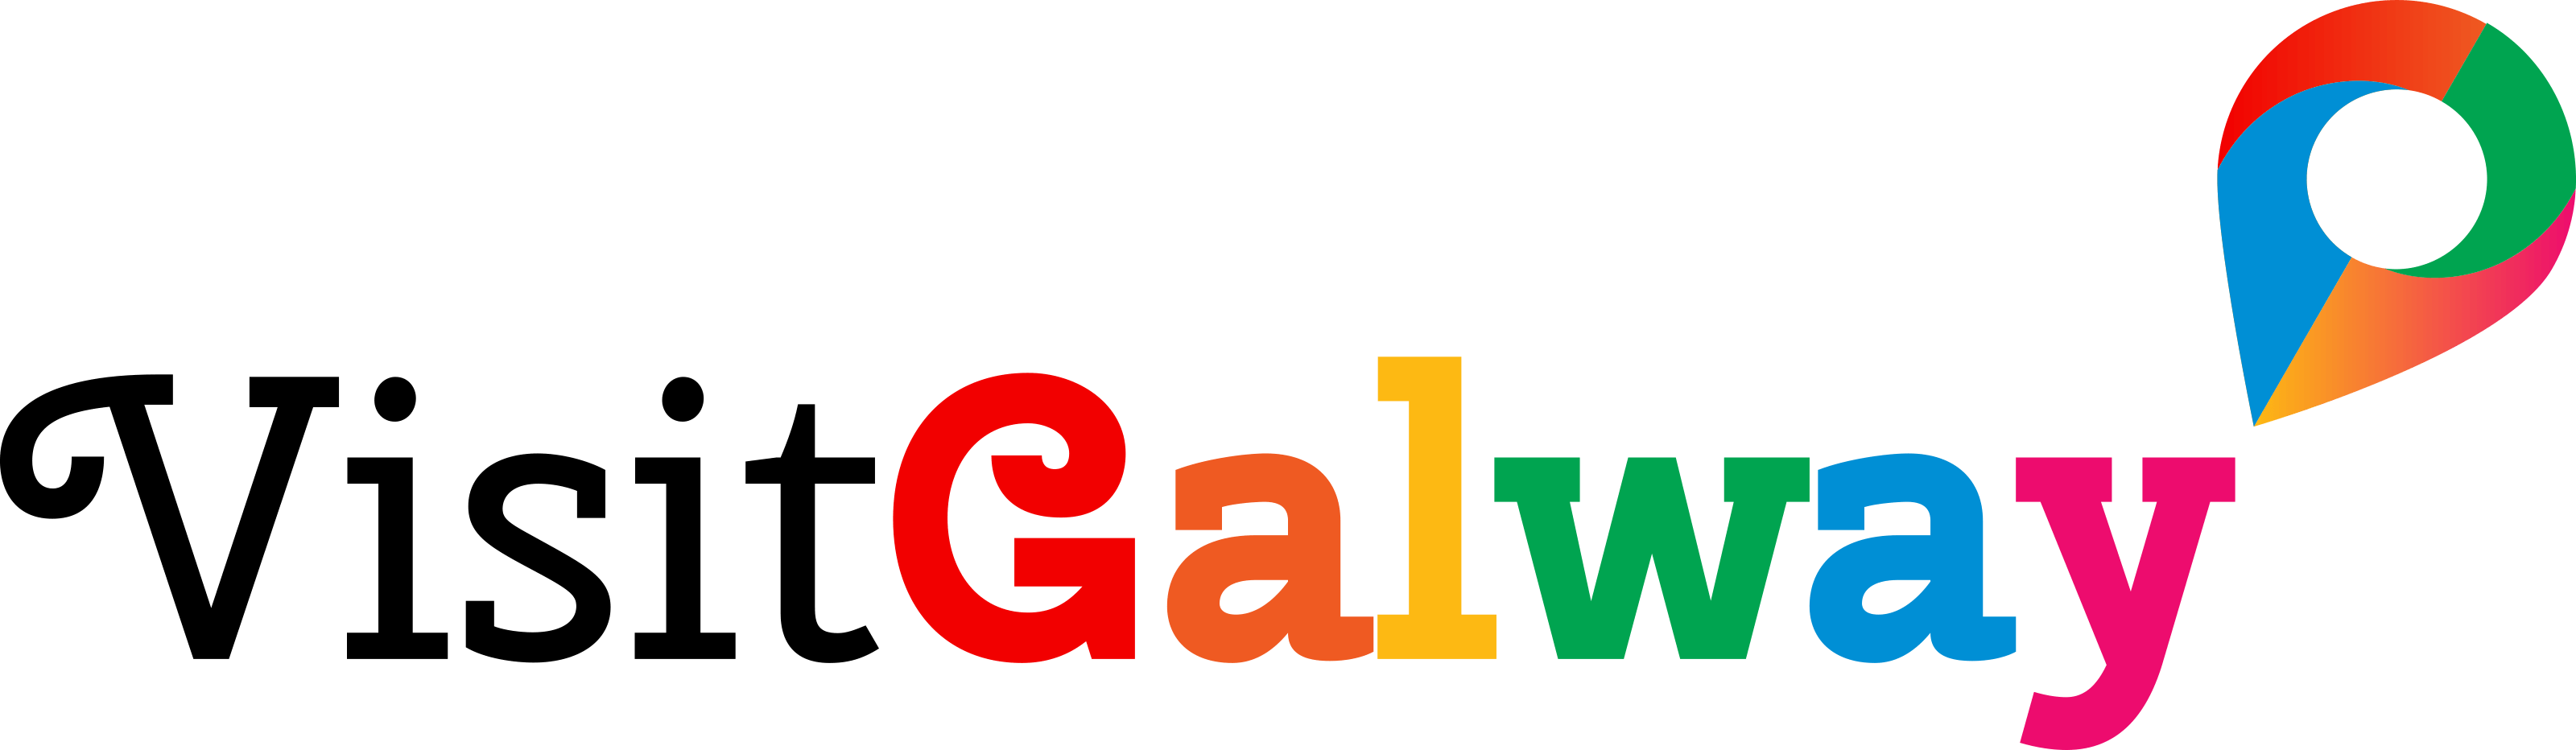 Galway Logo - Galway. Connemara. Aran Islands. Galway County. Guide to Galway